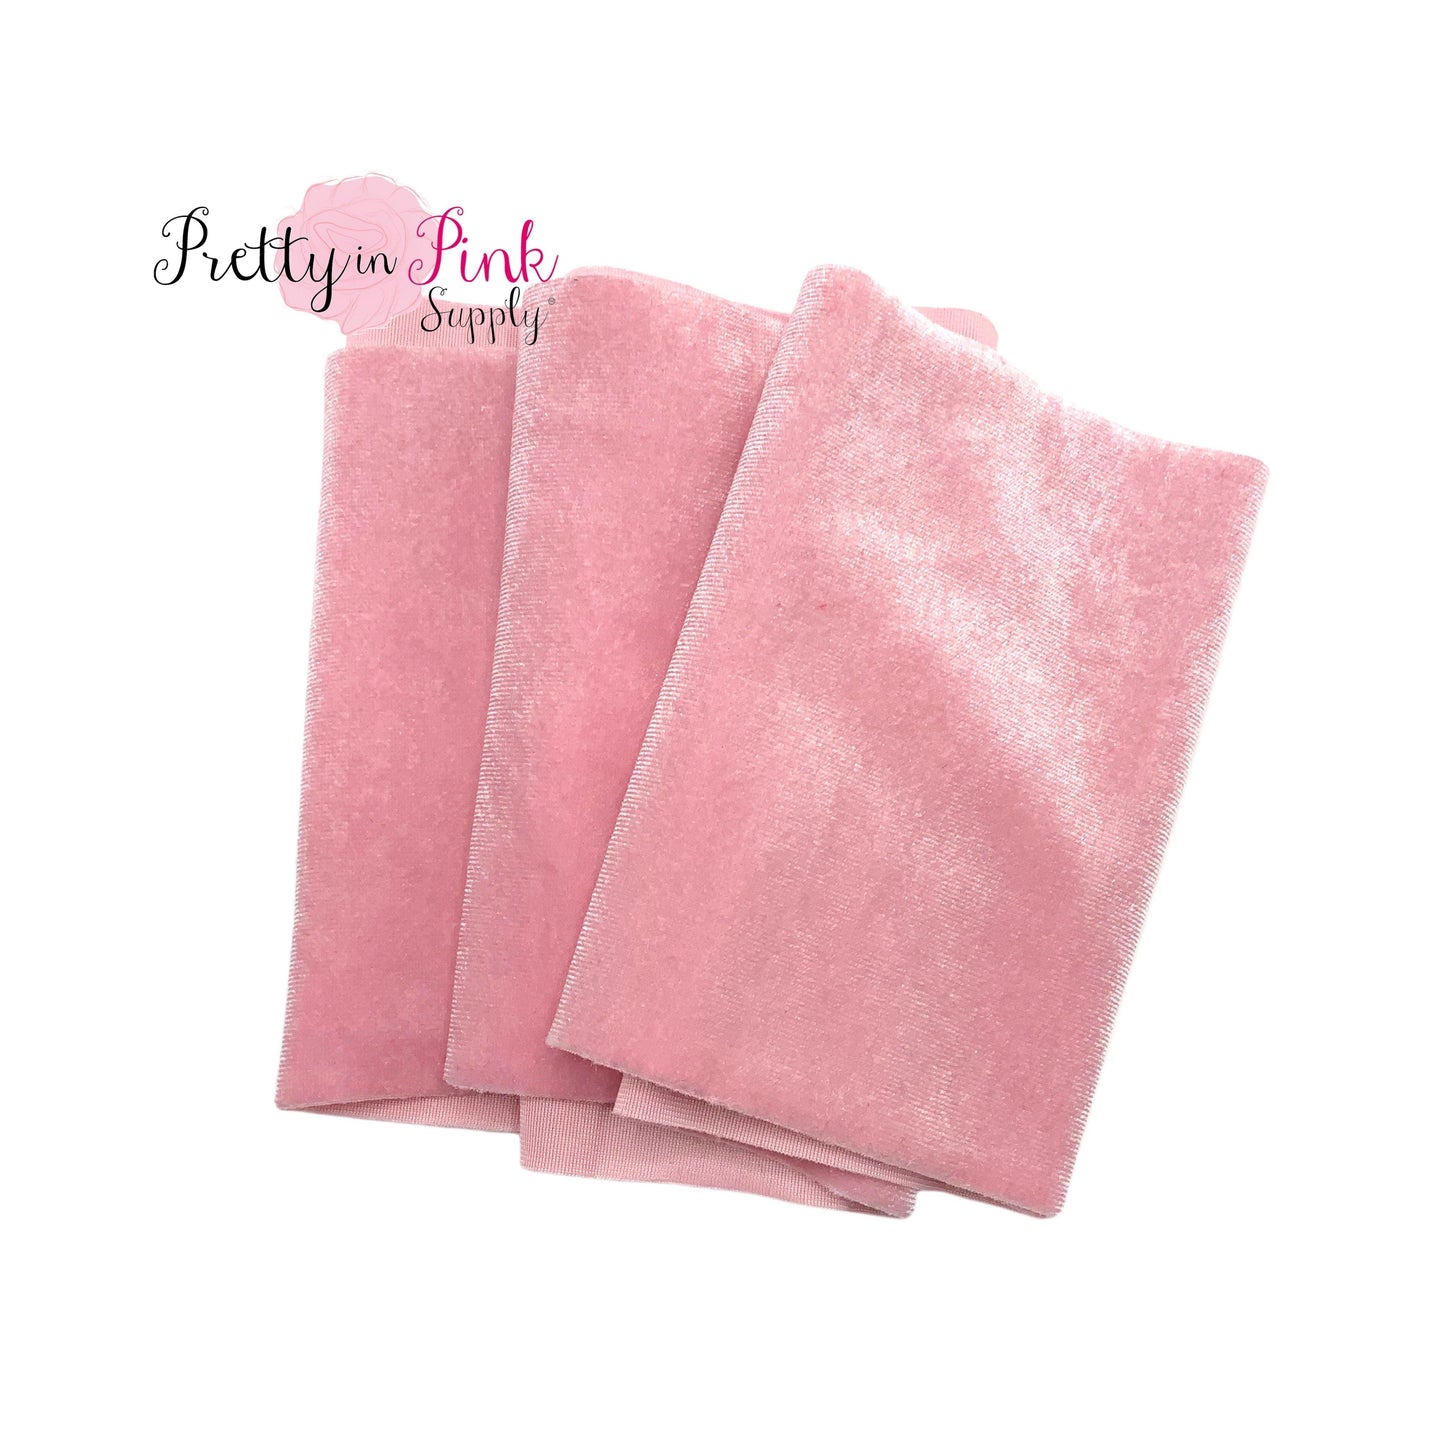 Folded over light pink color stretch velvet fabric strip.